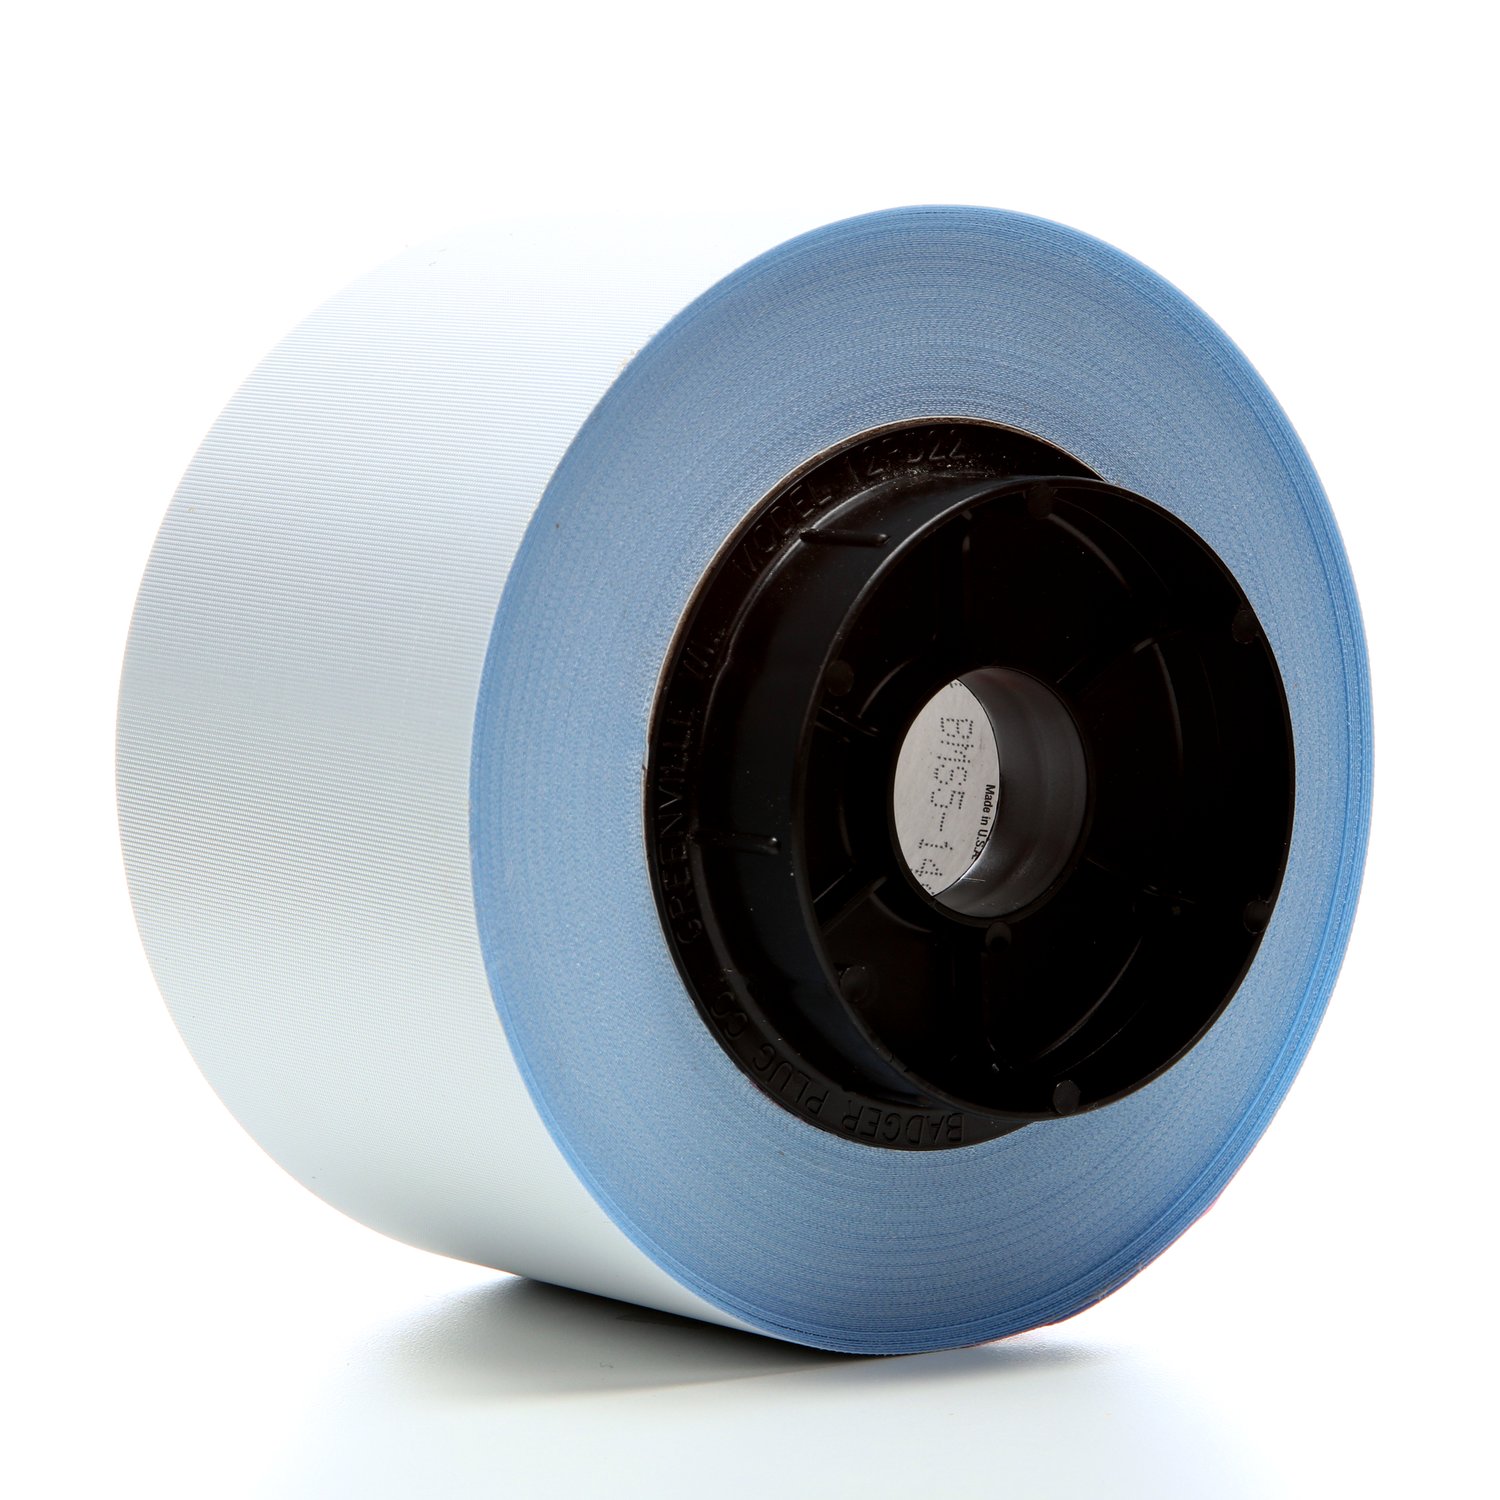 7000001301 - 3M Glass Cloth Tape 398FR, White, 3 in x 36 yd, 7 mil, 12 rolls per
case